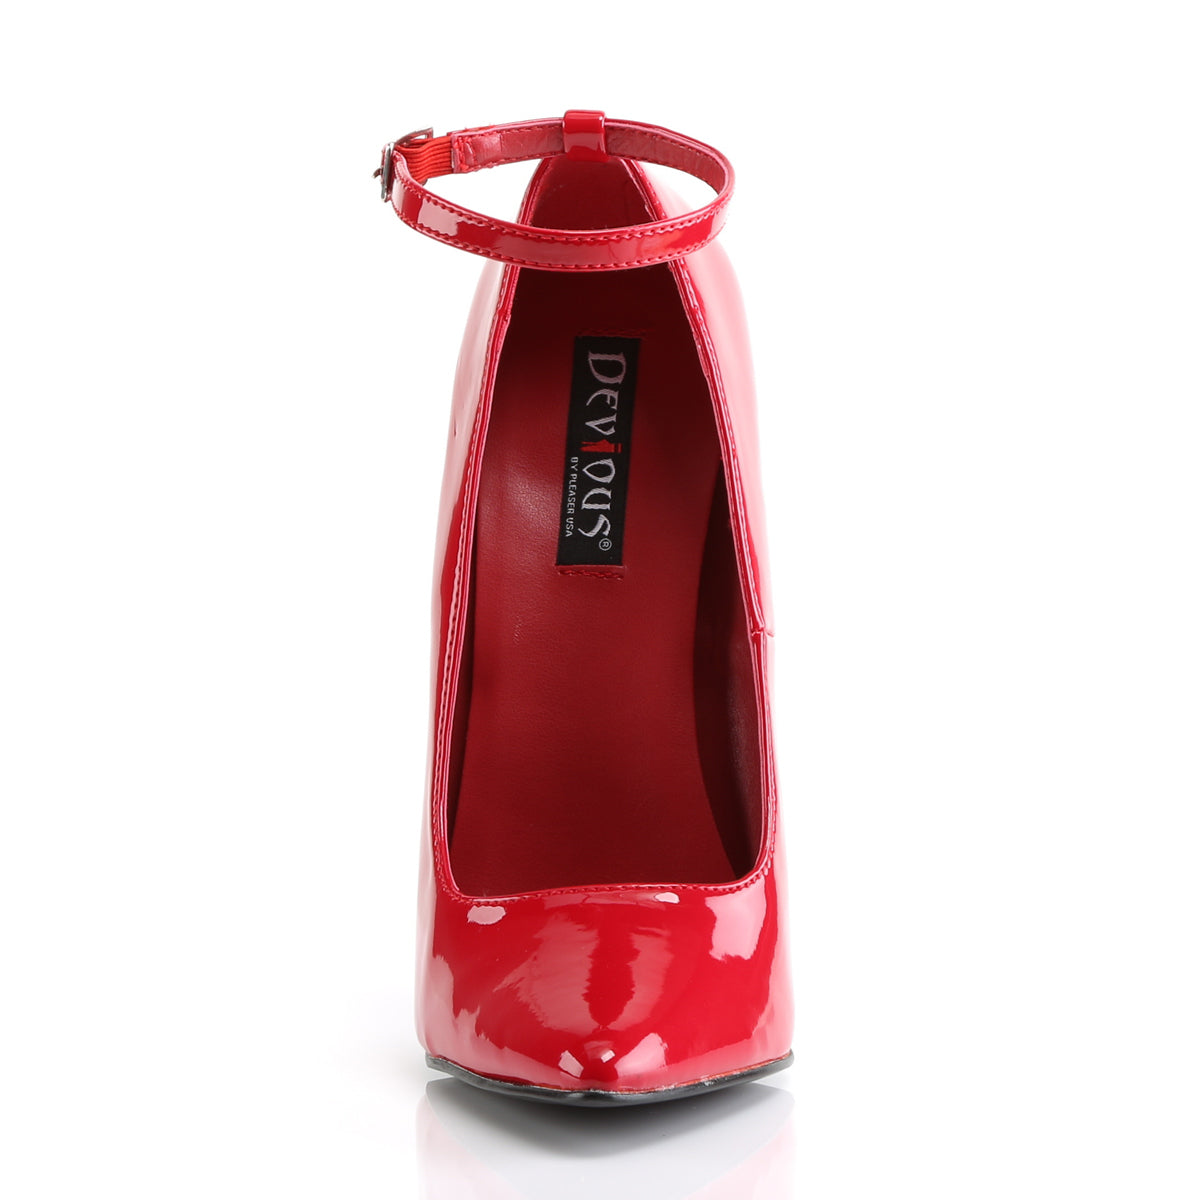 DAGGER-12 Devious Heels Red Patent Single Soles [Fetish Heels]